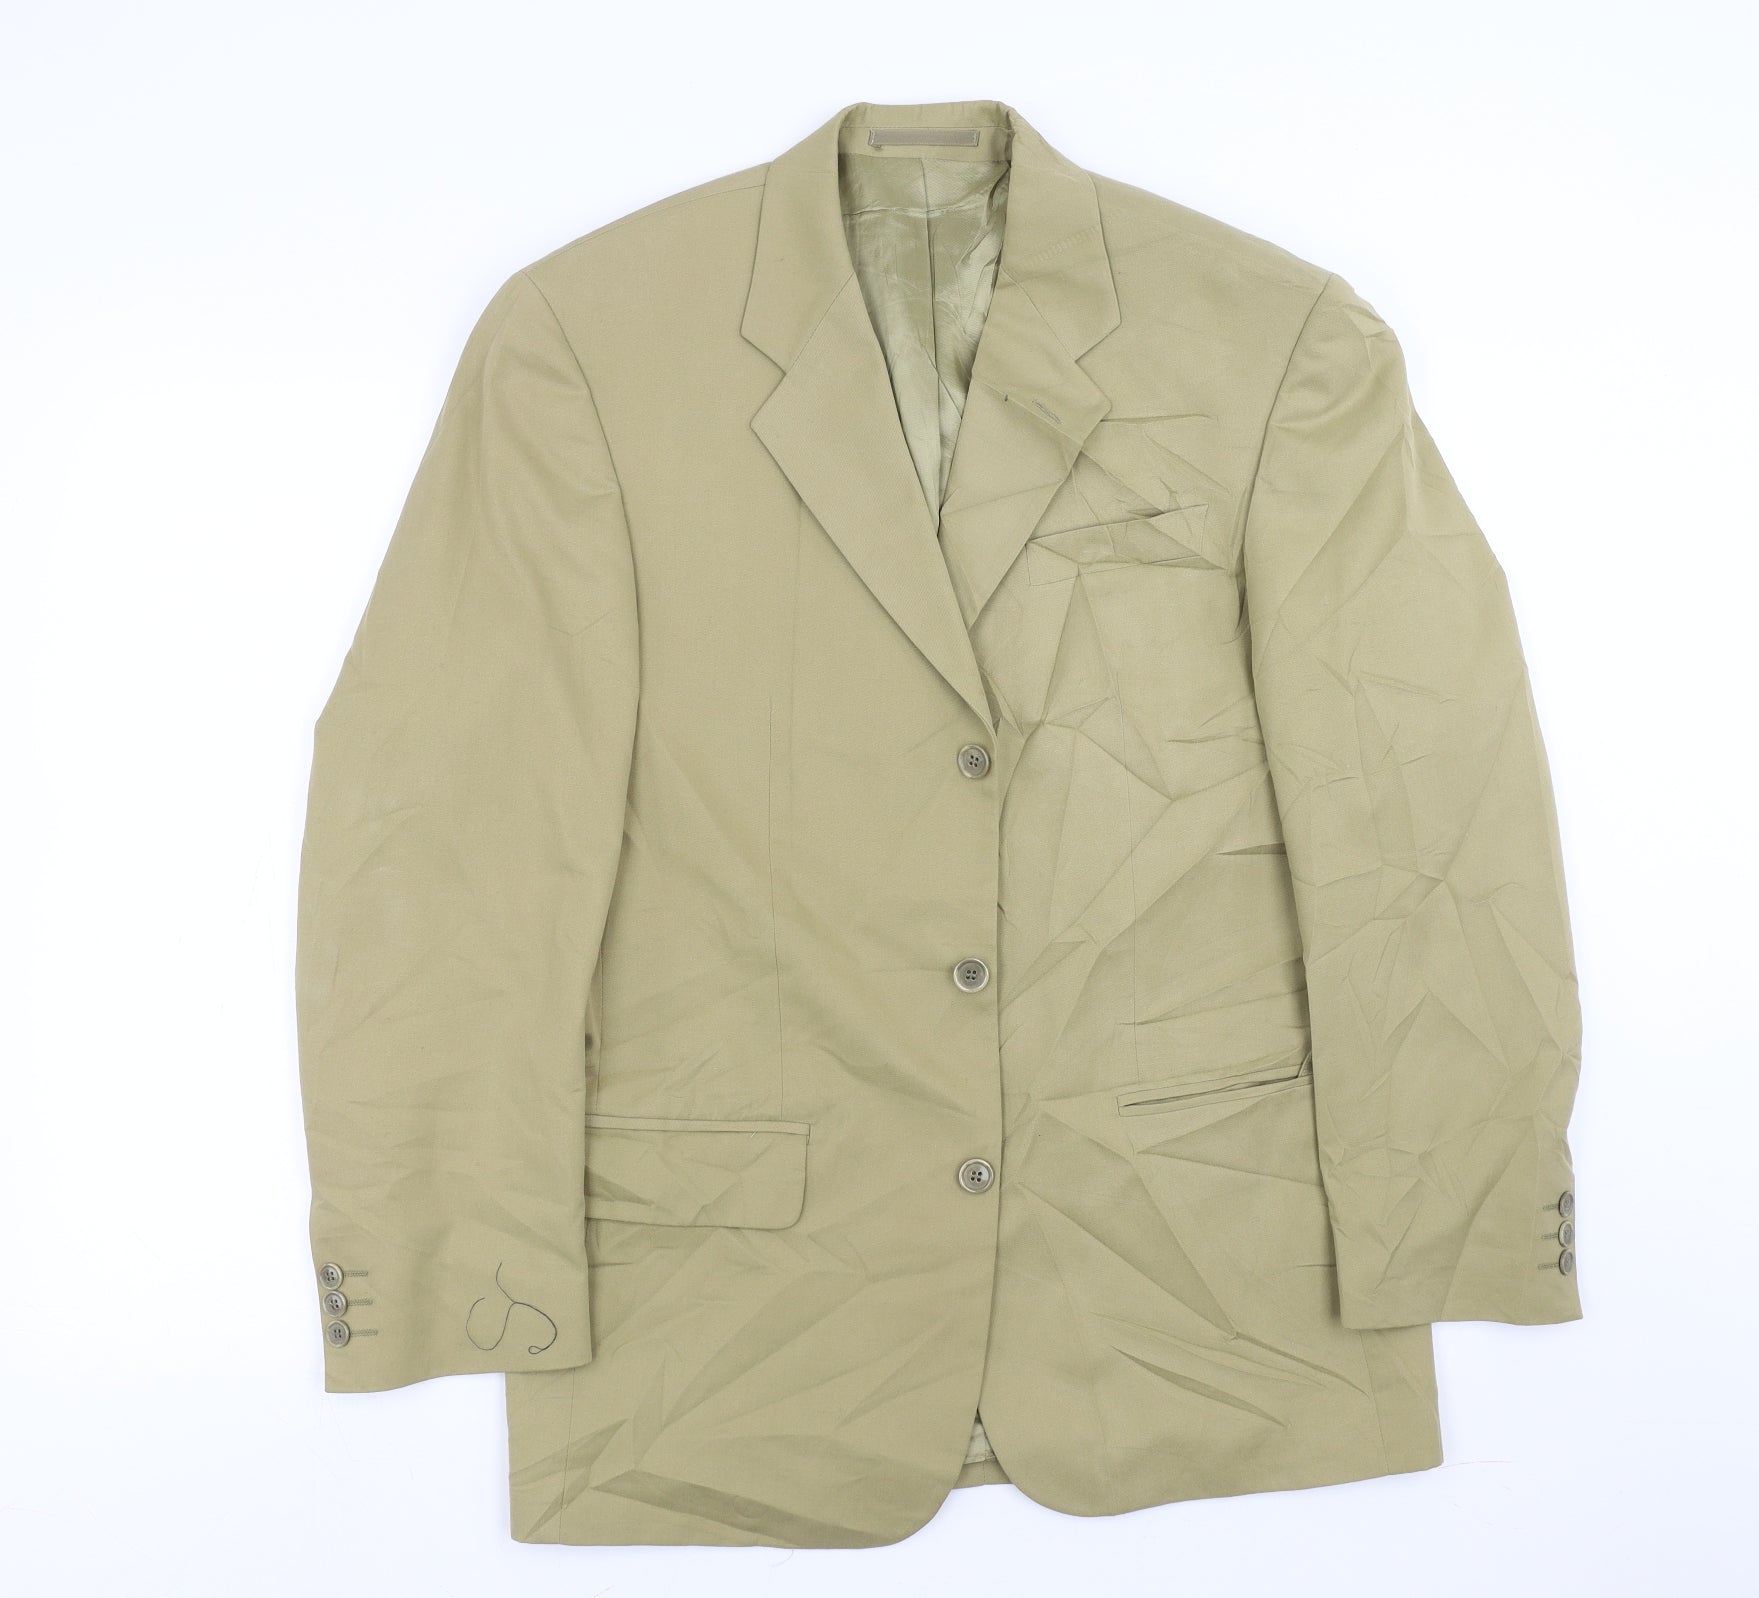 conqueror Mens Green Jacket Suit Jacket Size 38 Rewards - Monetha